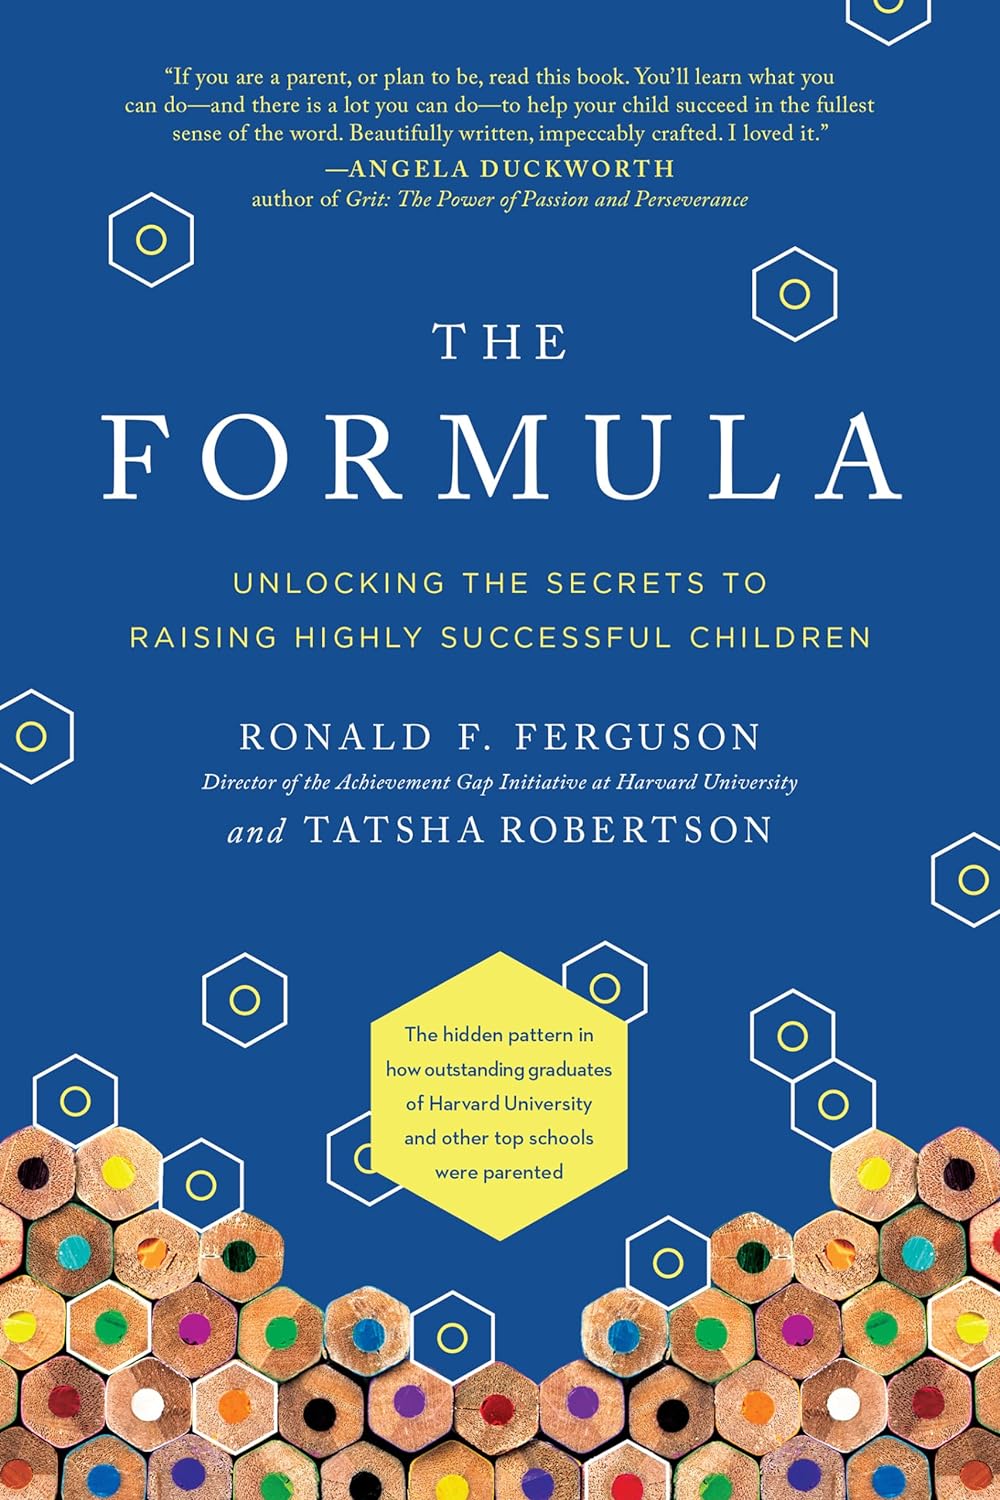 The Formula: Unlocking the Secrets to Raising Highly Successful Children Book by Ronald Ferguson and Tatsha Robertson